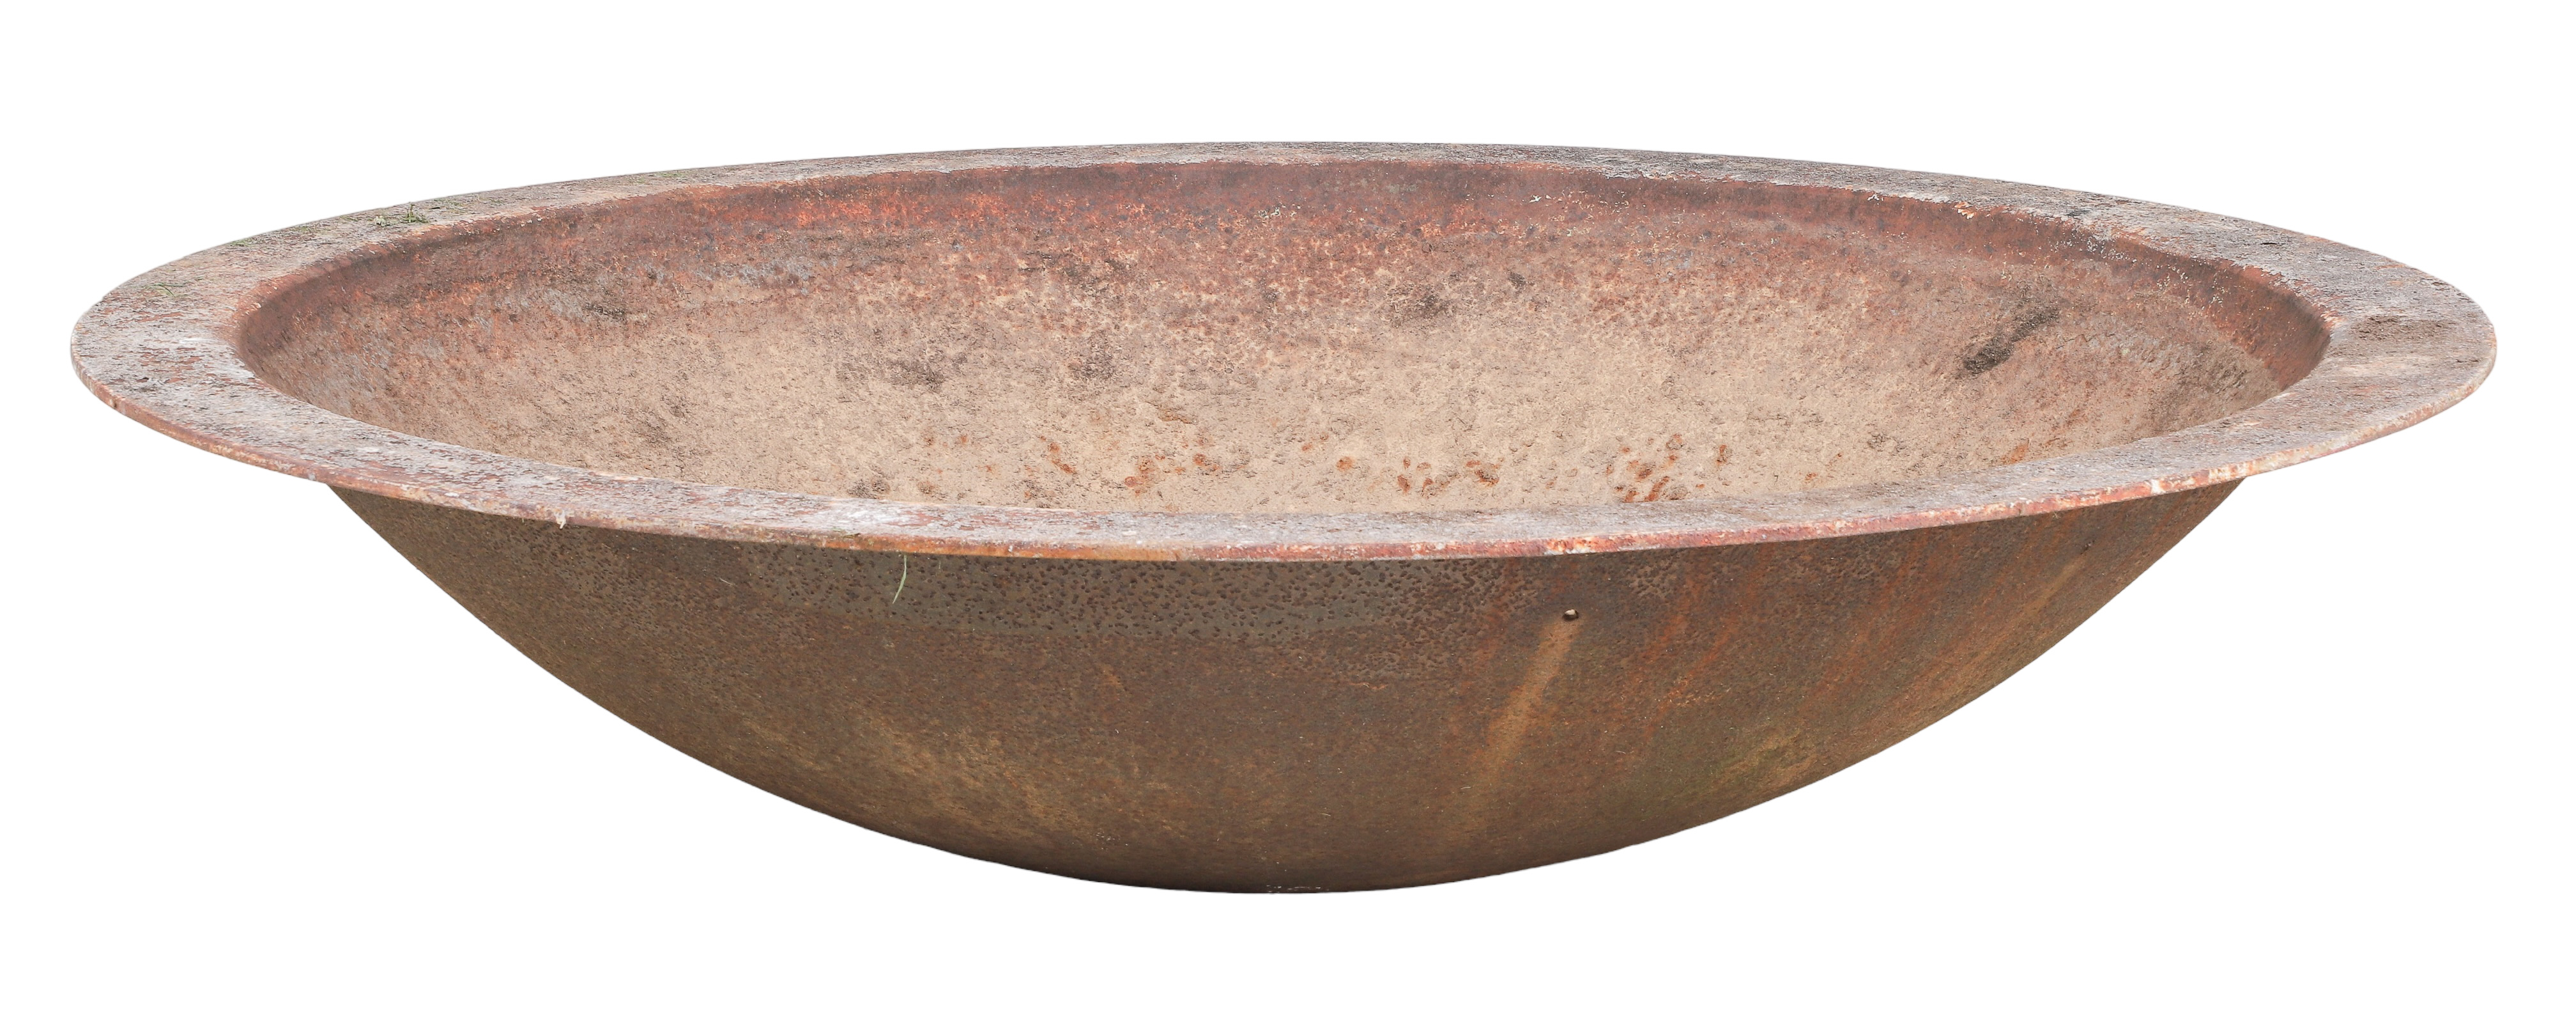 Monumental steel bowl salvaged 2e1dfc